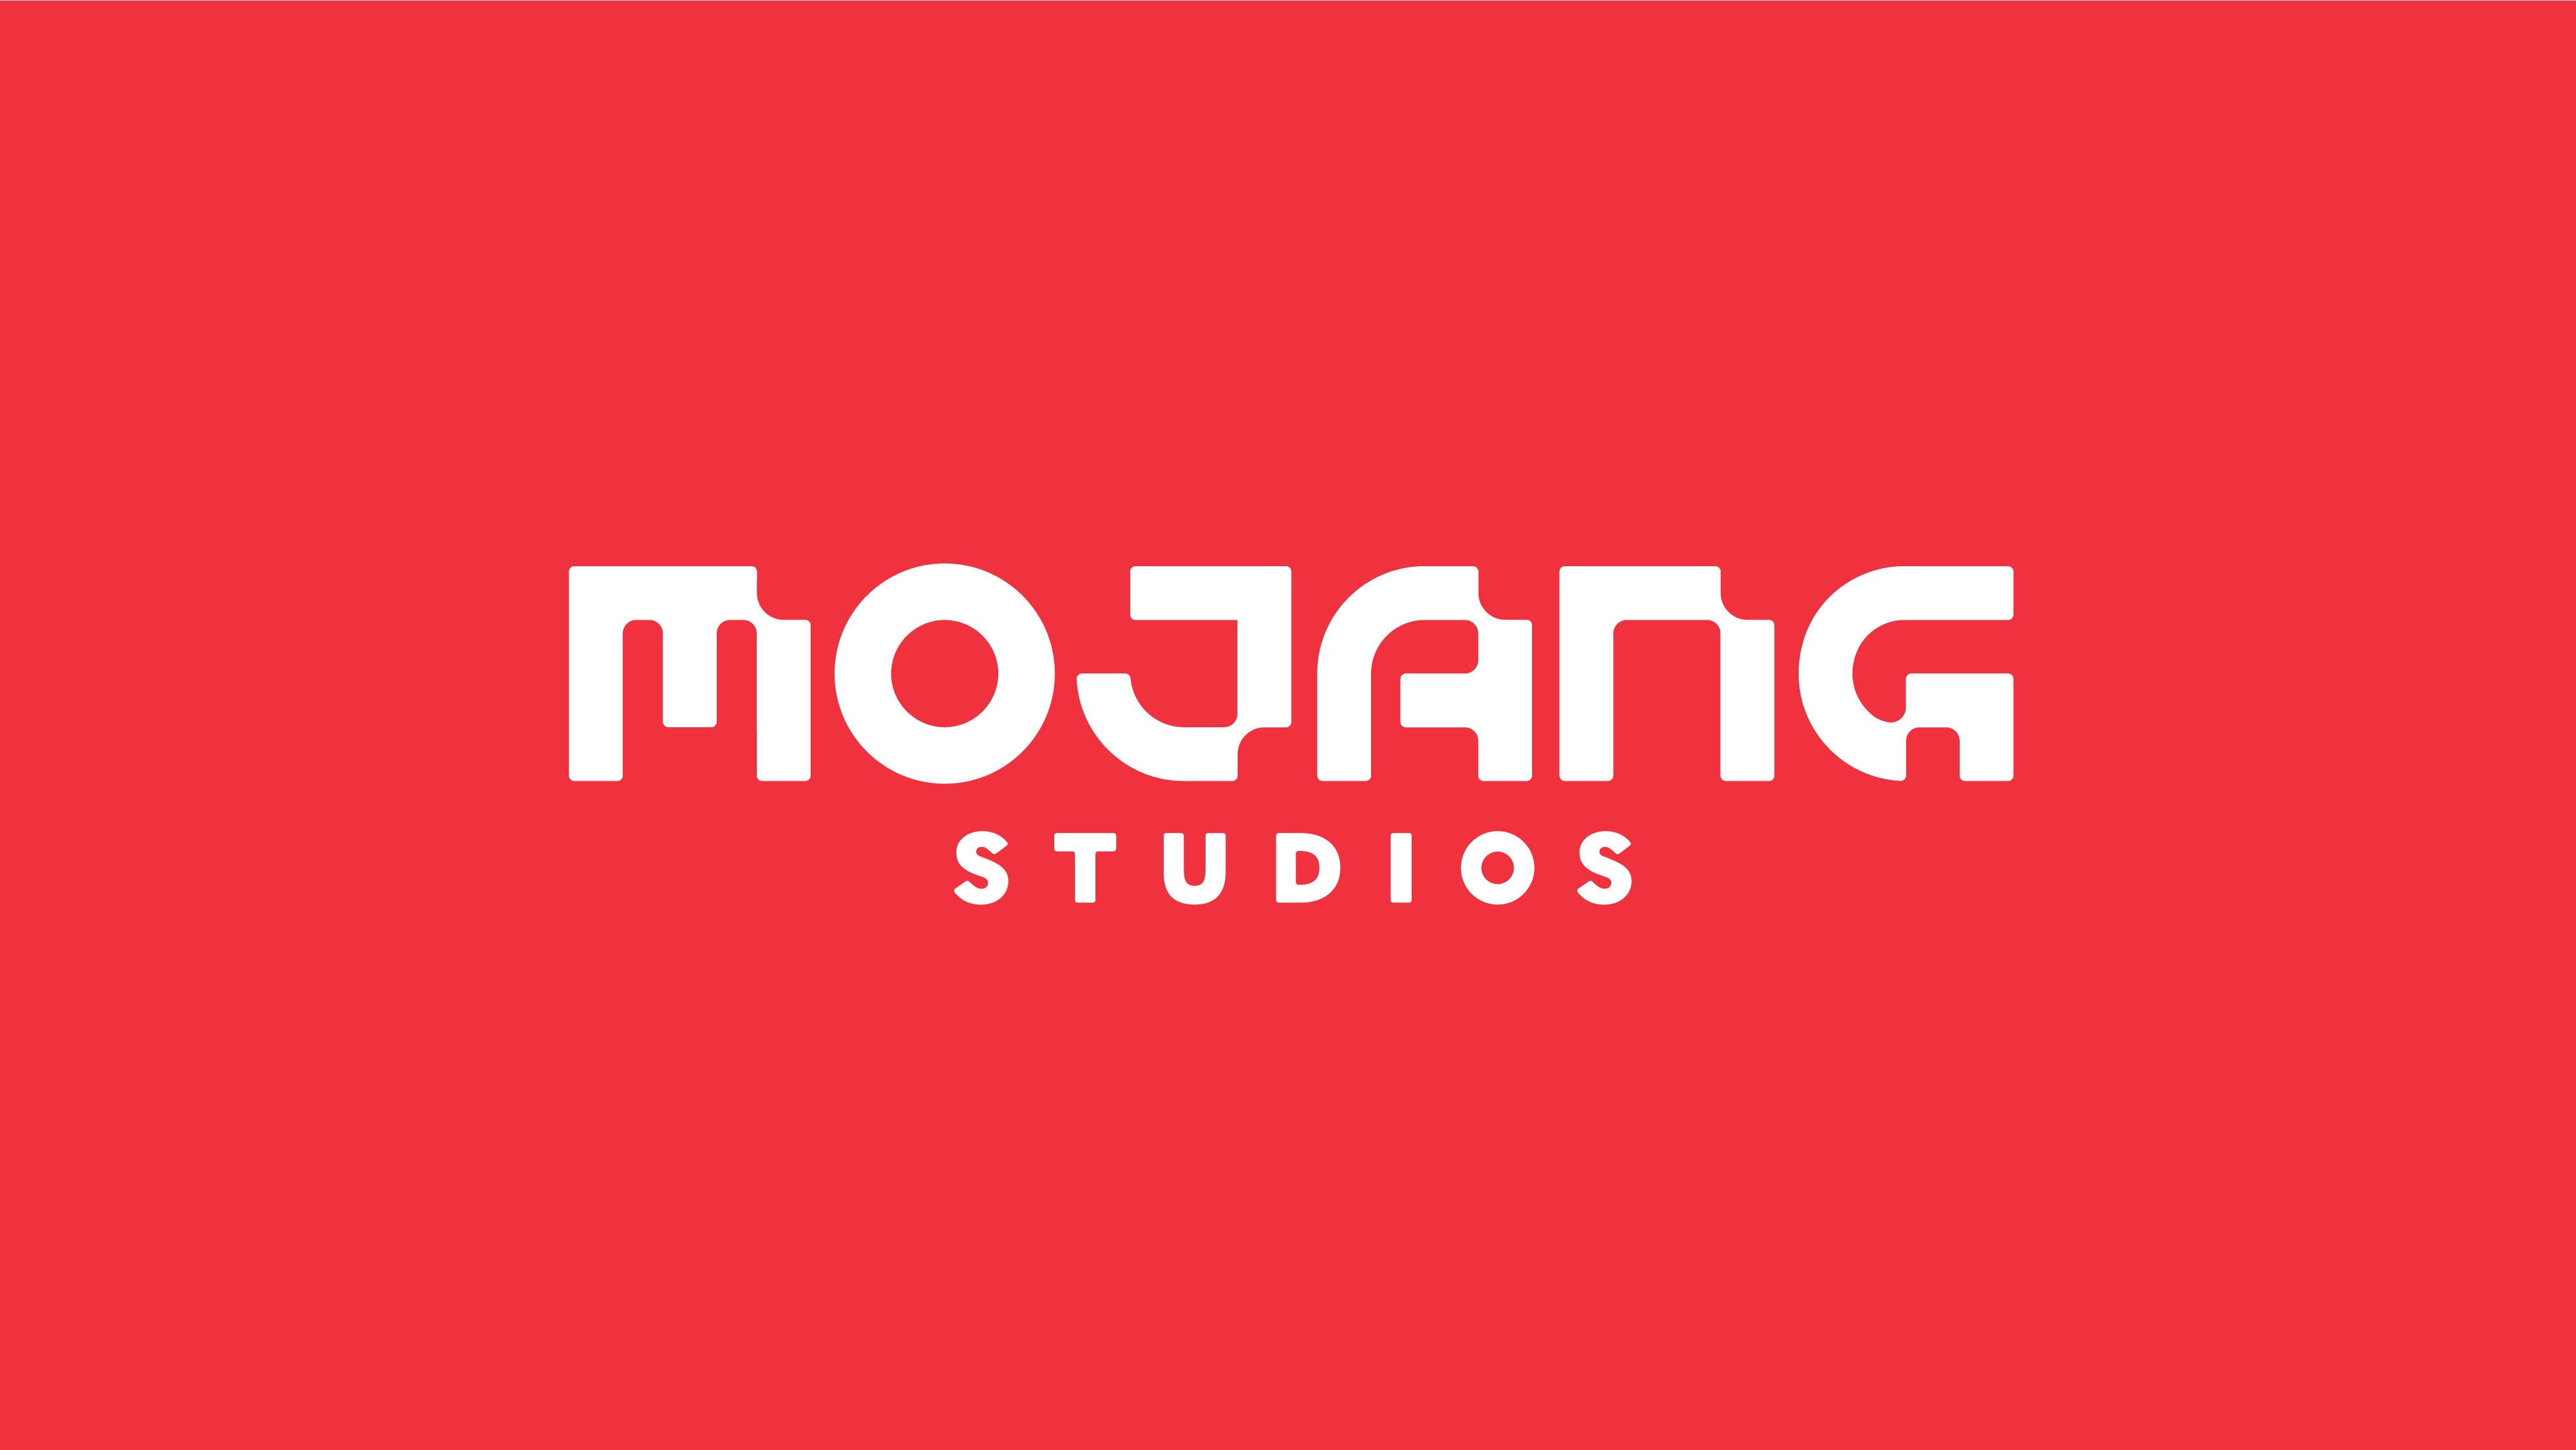 Mojang Studios - Wikipedia